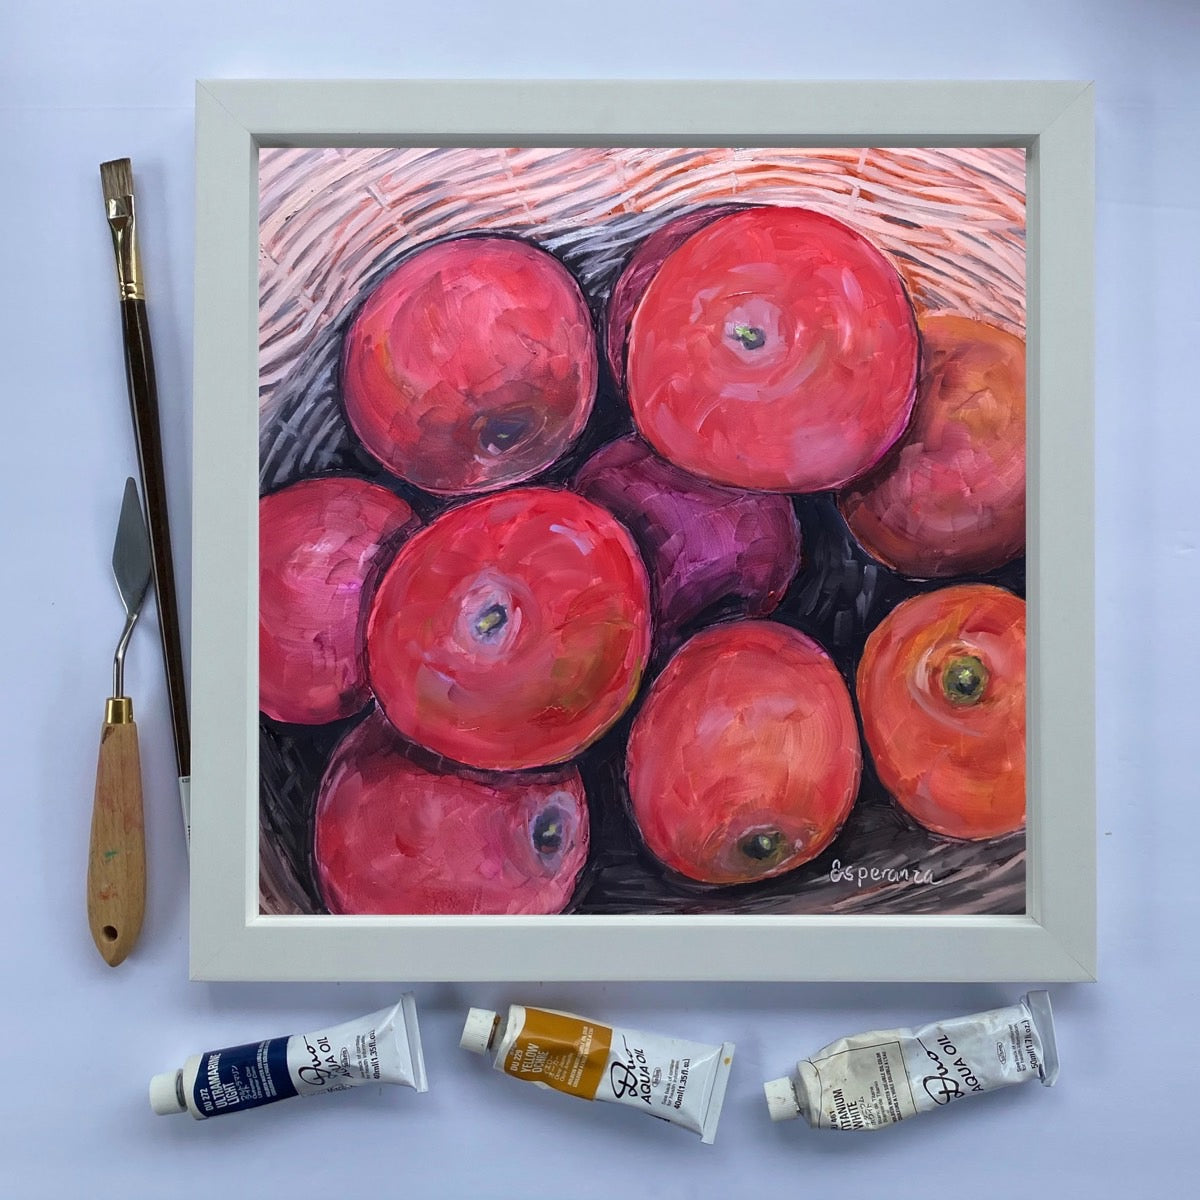 "Apple Harvest" 12x12 original painting